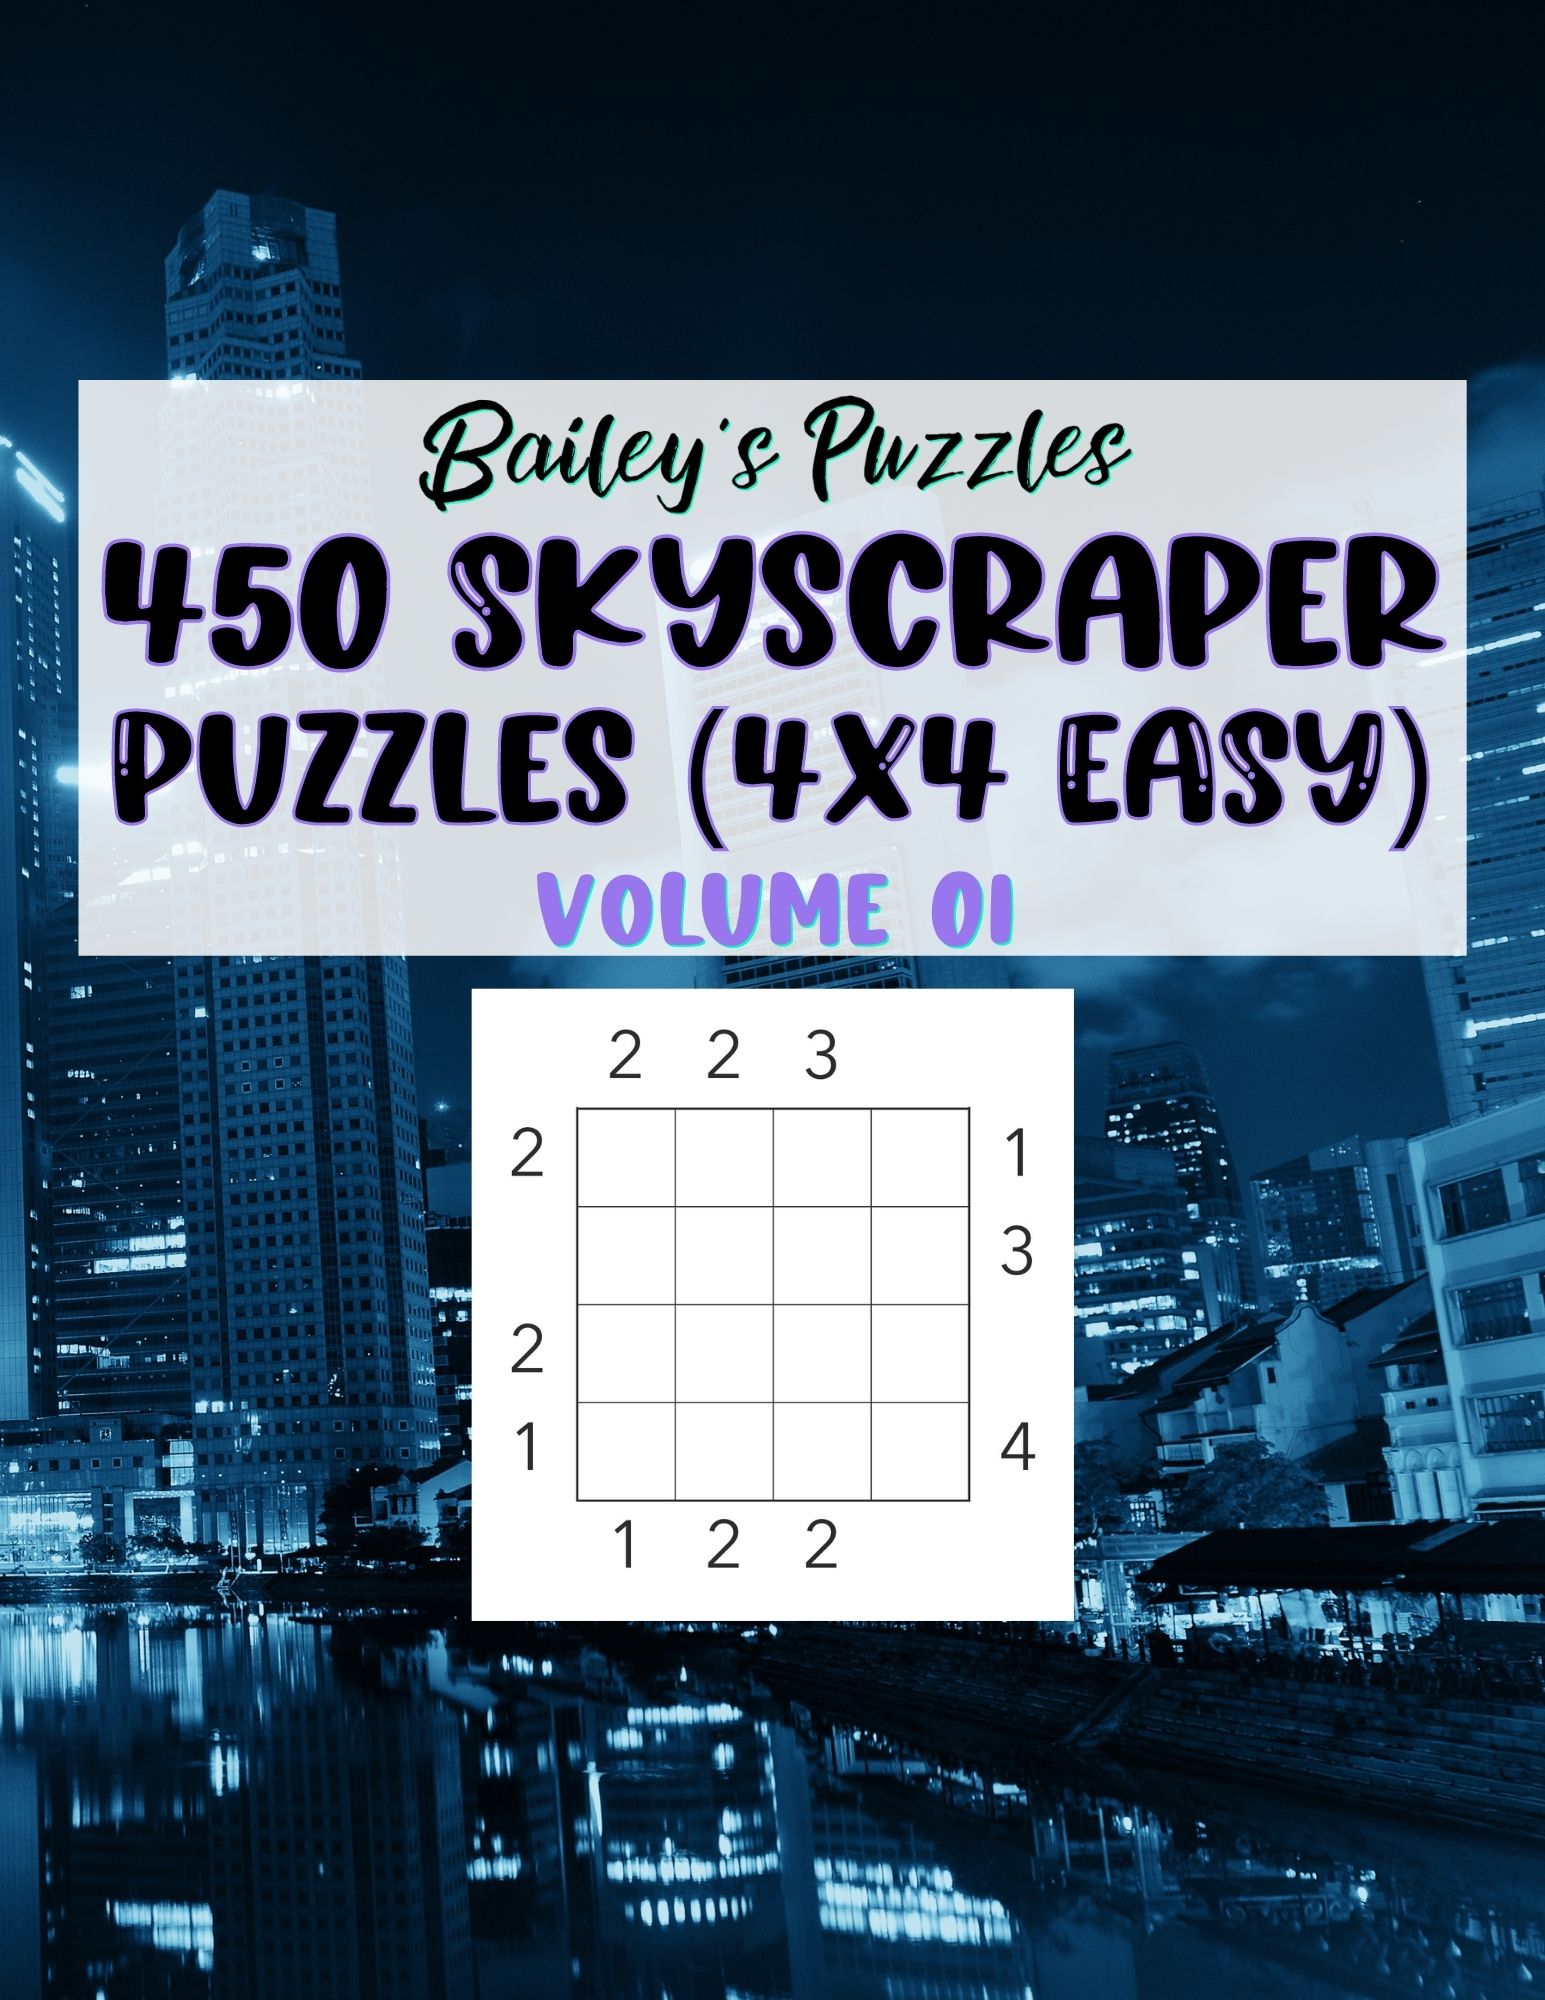 Front Cover - 450 Skyscraper Puzzles (4x4, easy)